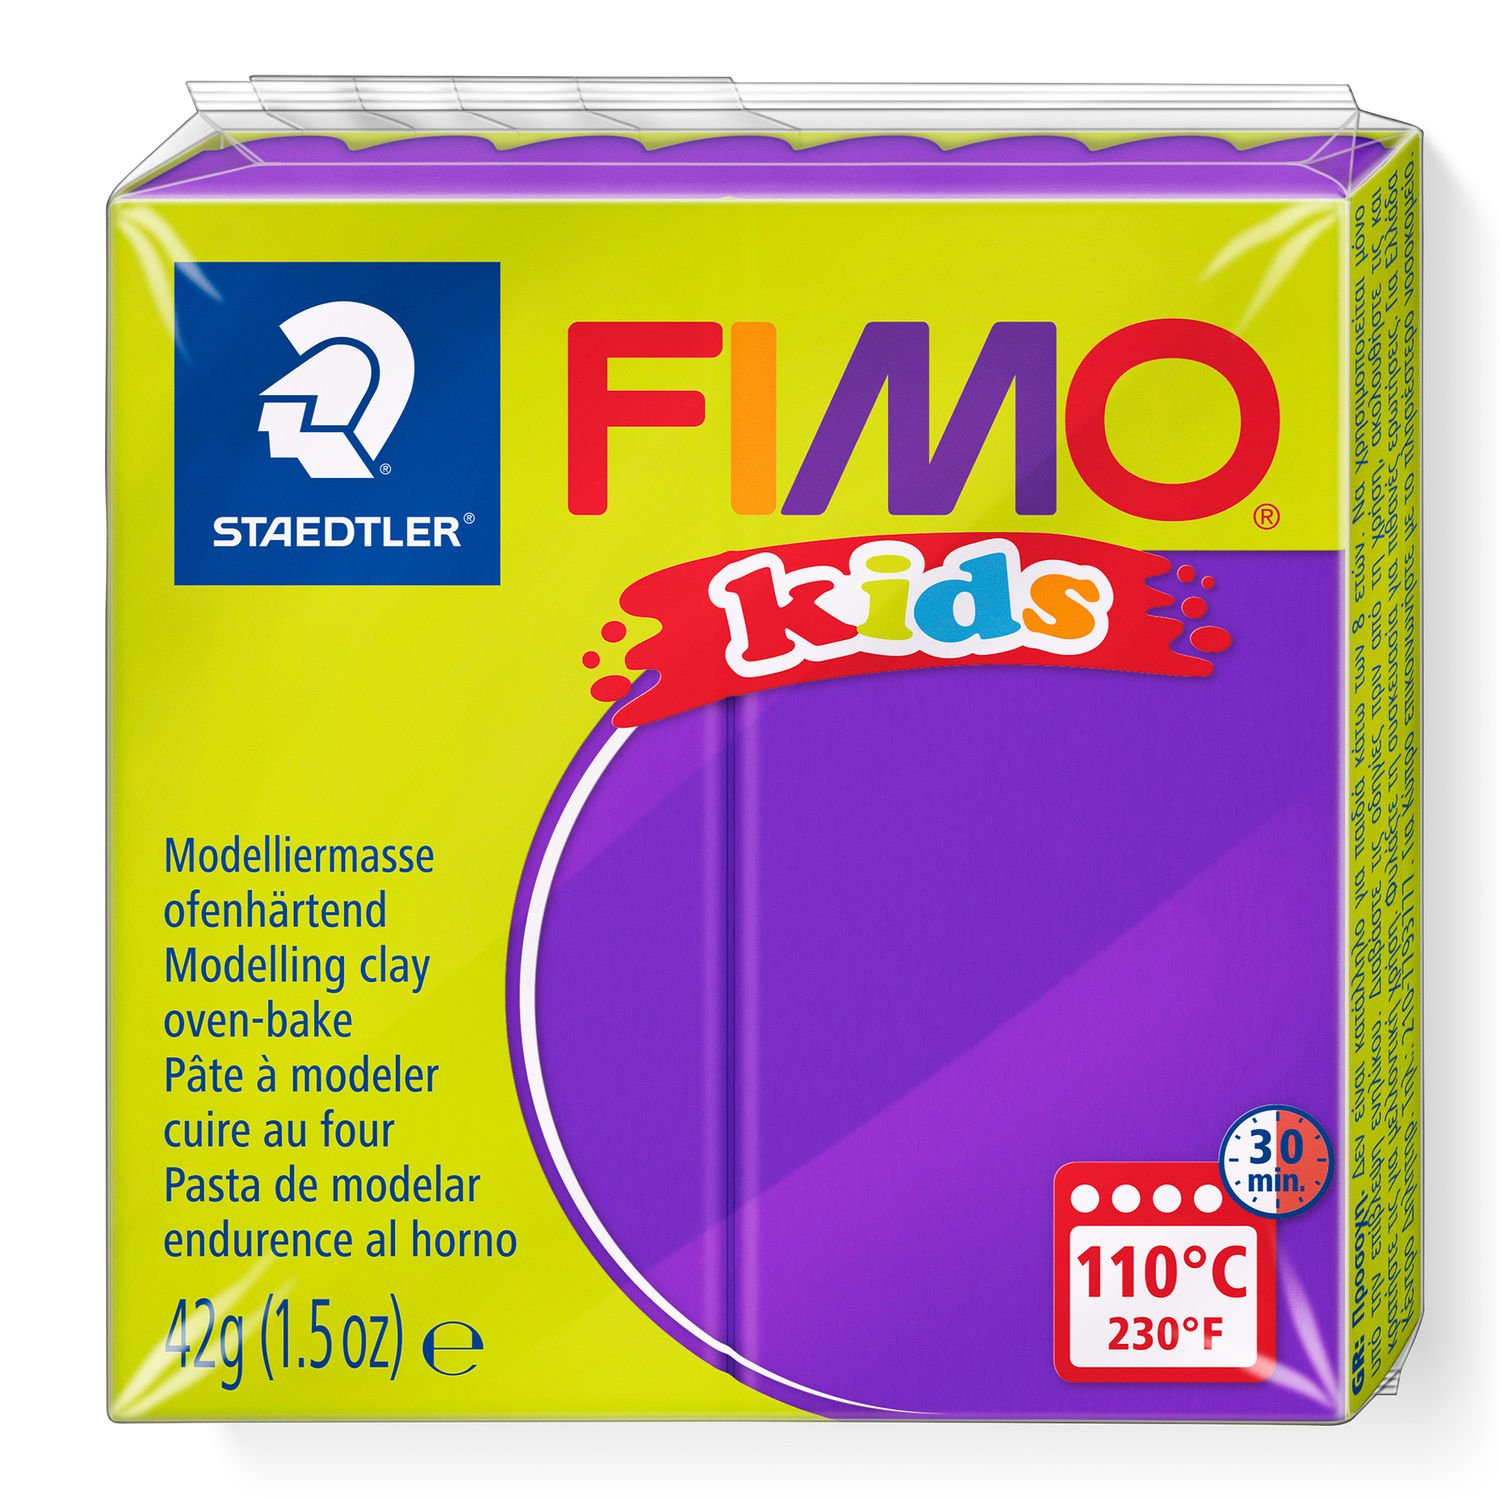 Staedtler FIMO 8030 - Lila Knetmasse für Kinder - 1 Stück - 110 °C